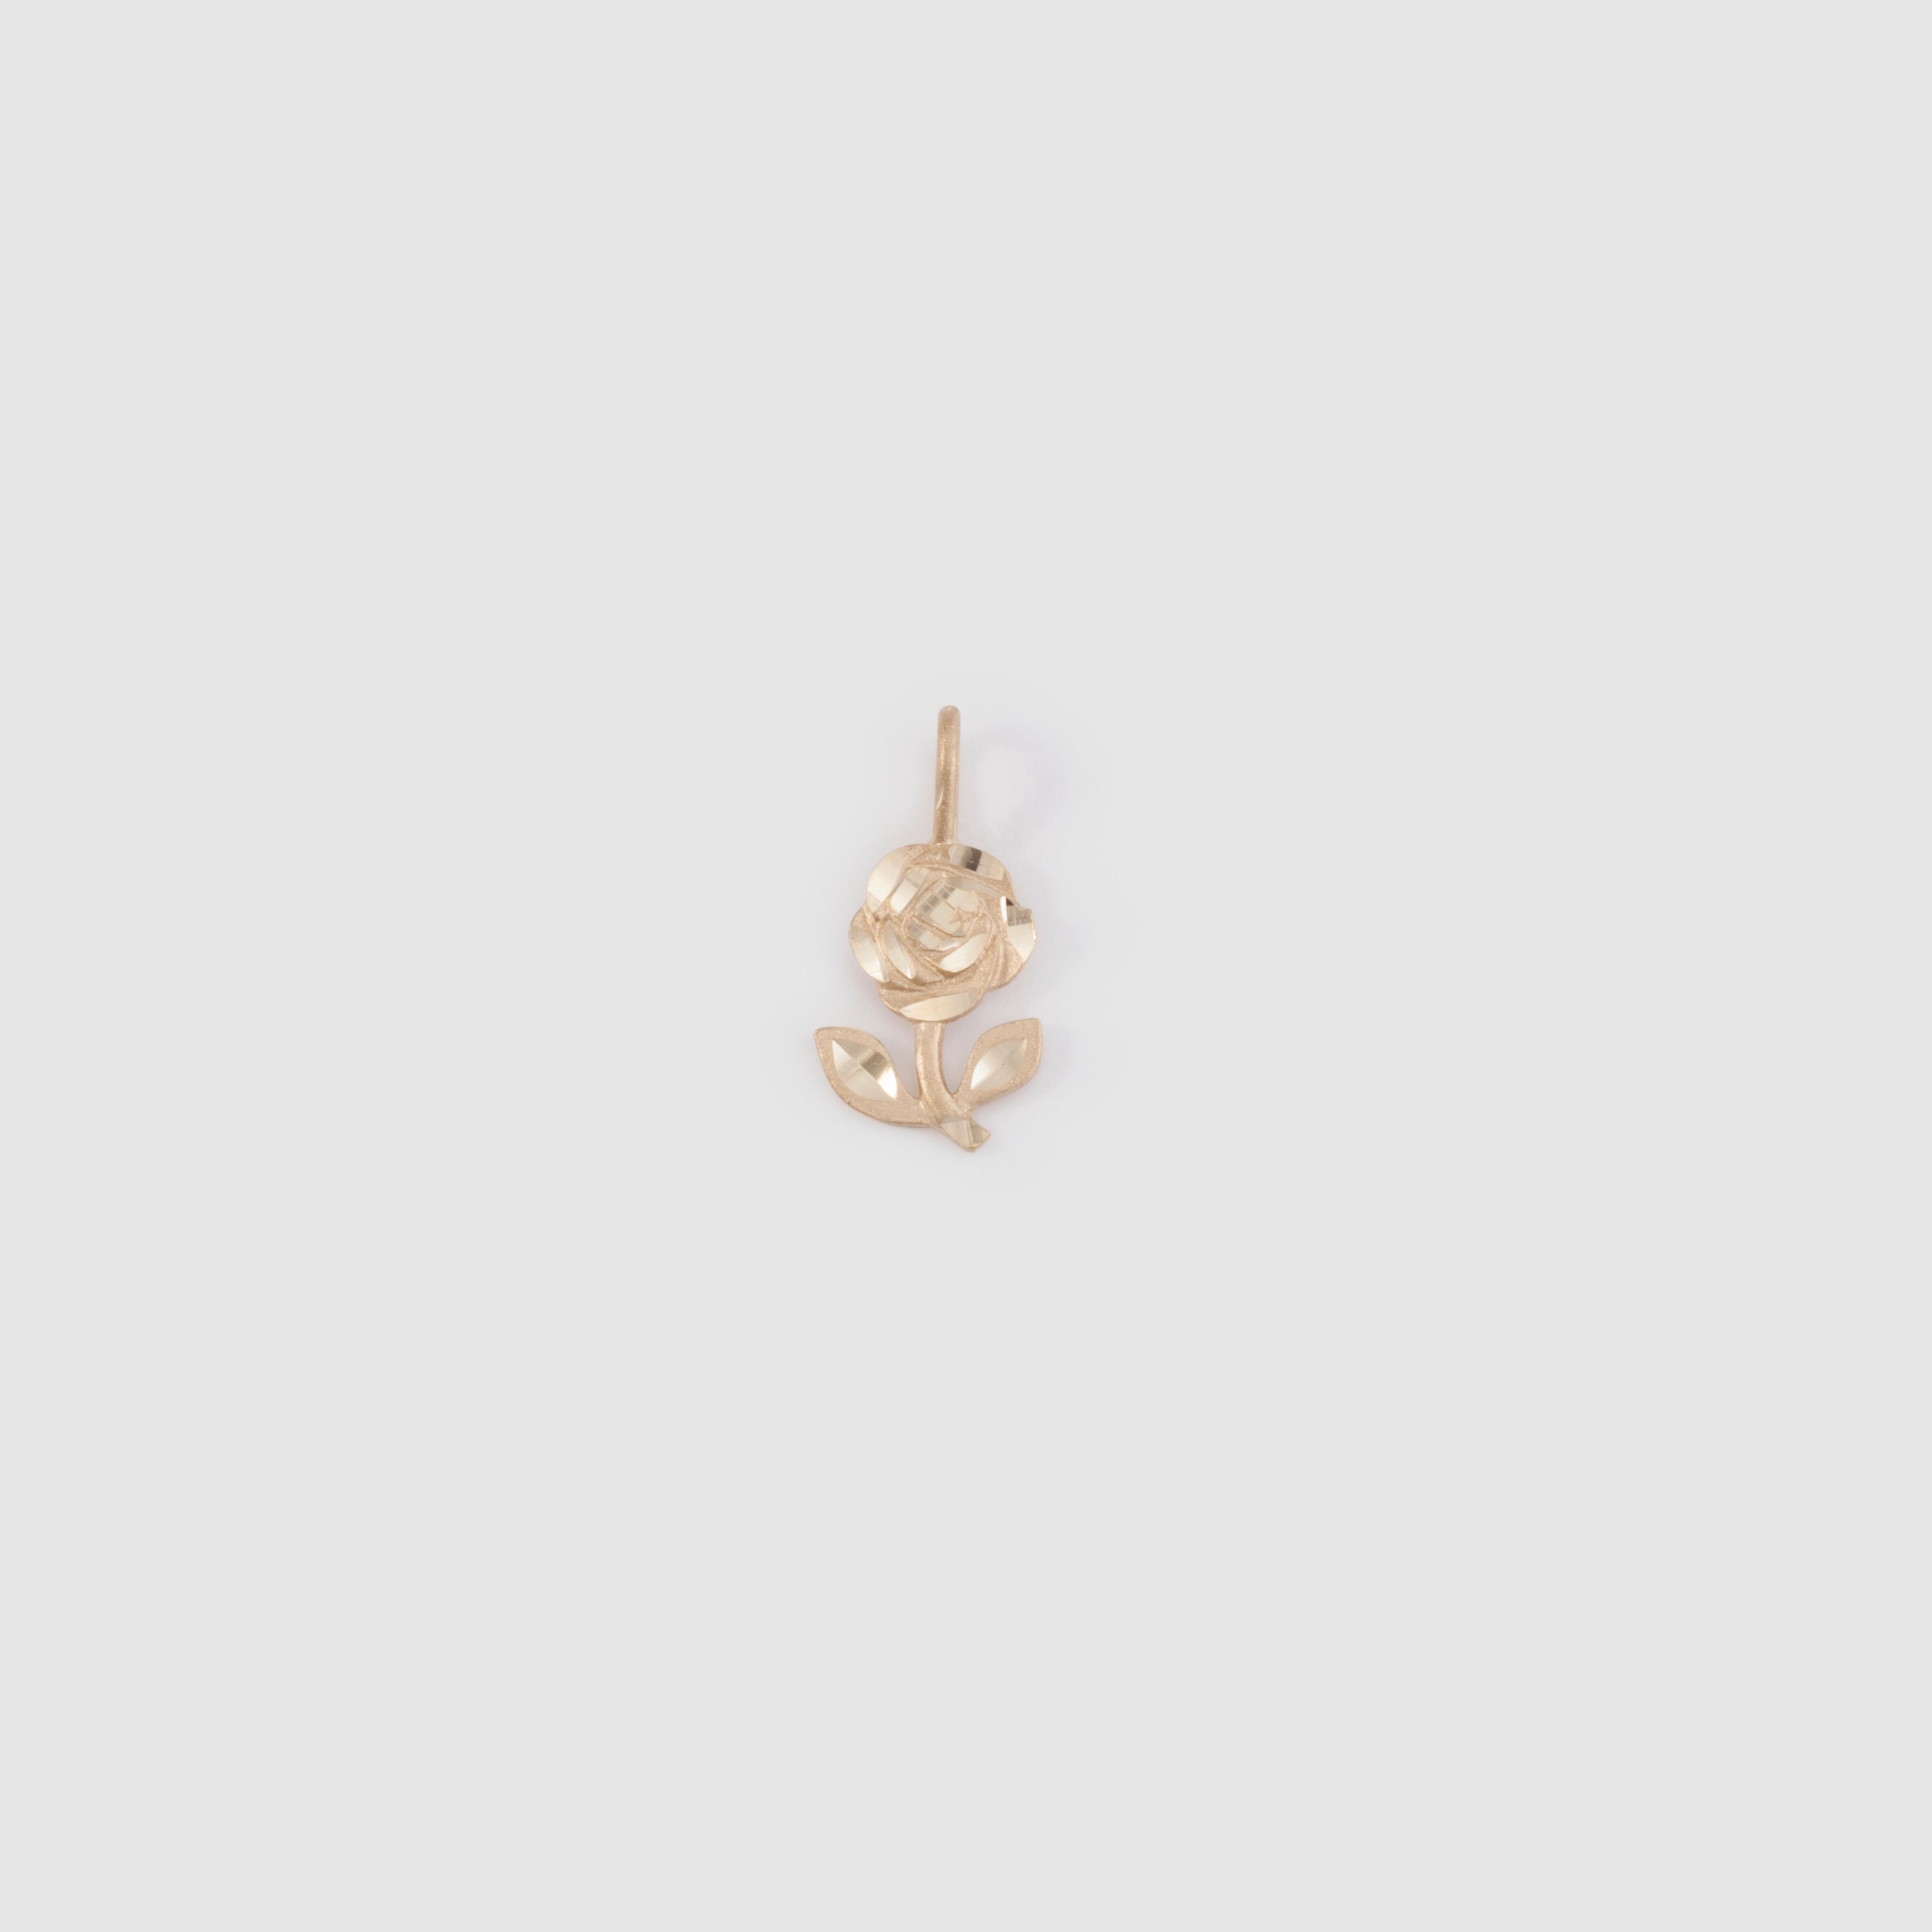 10k yellow gold flower pendant with diamond cut details